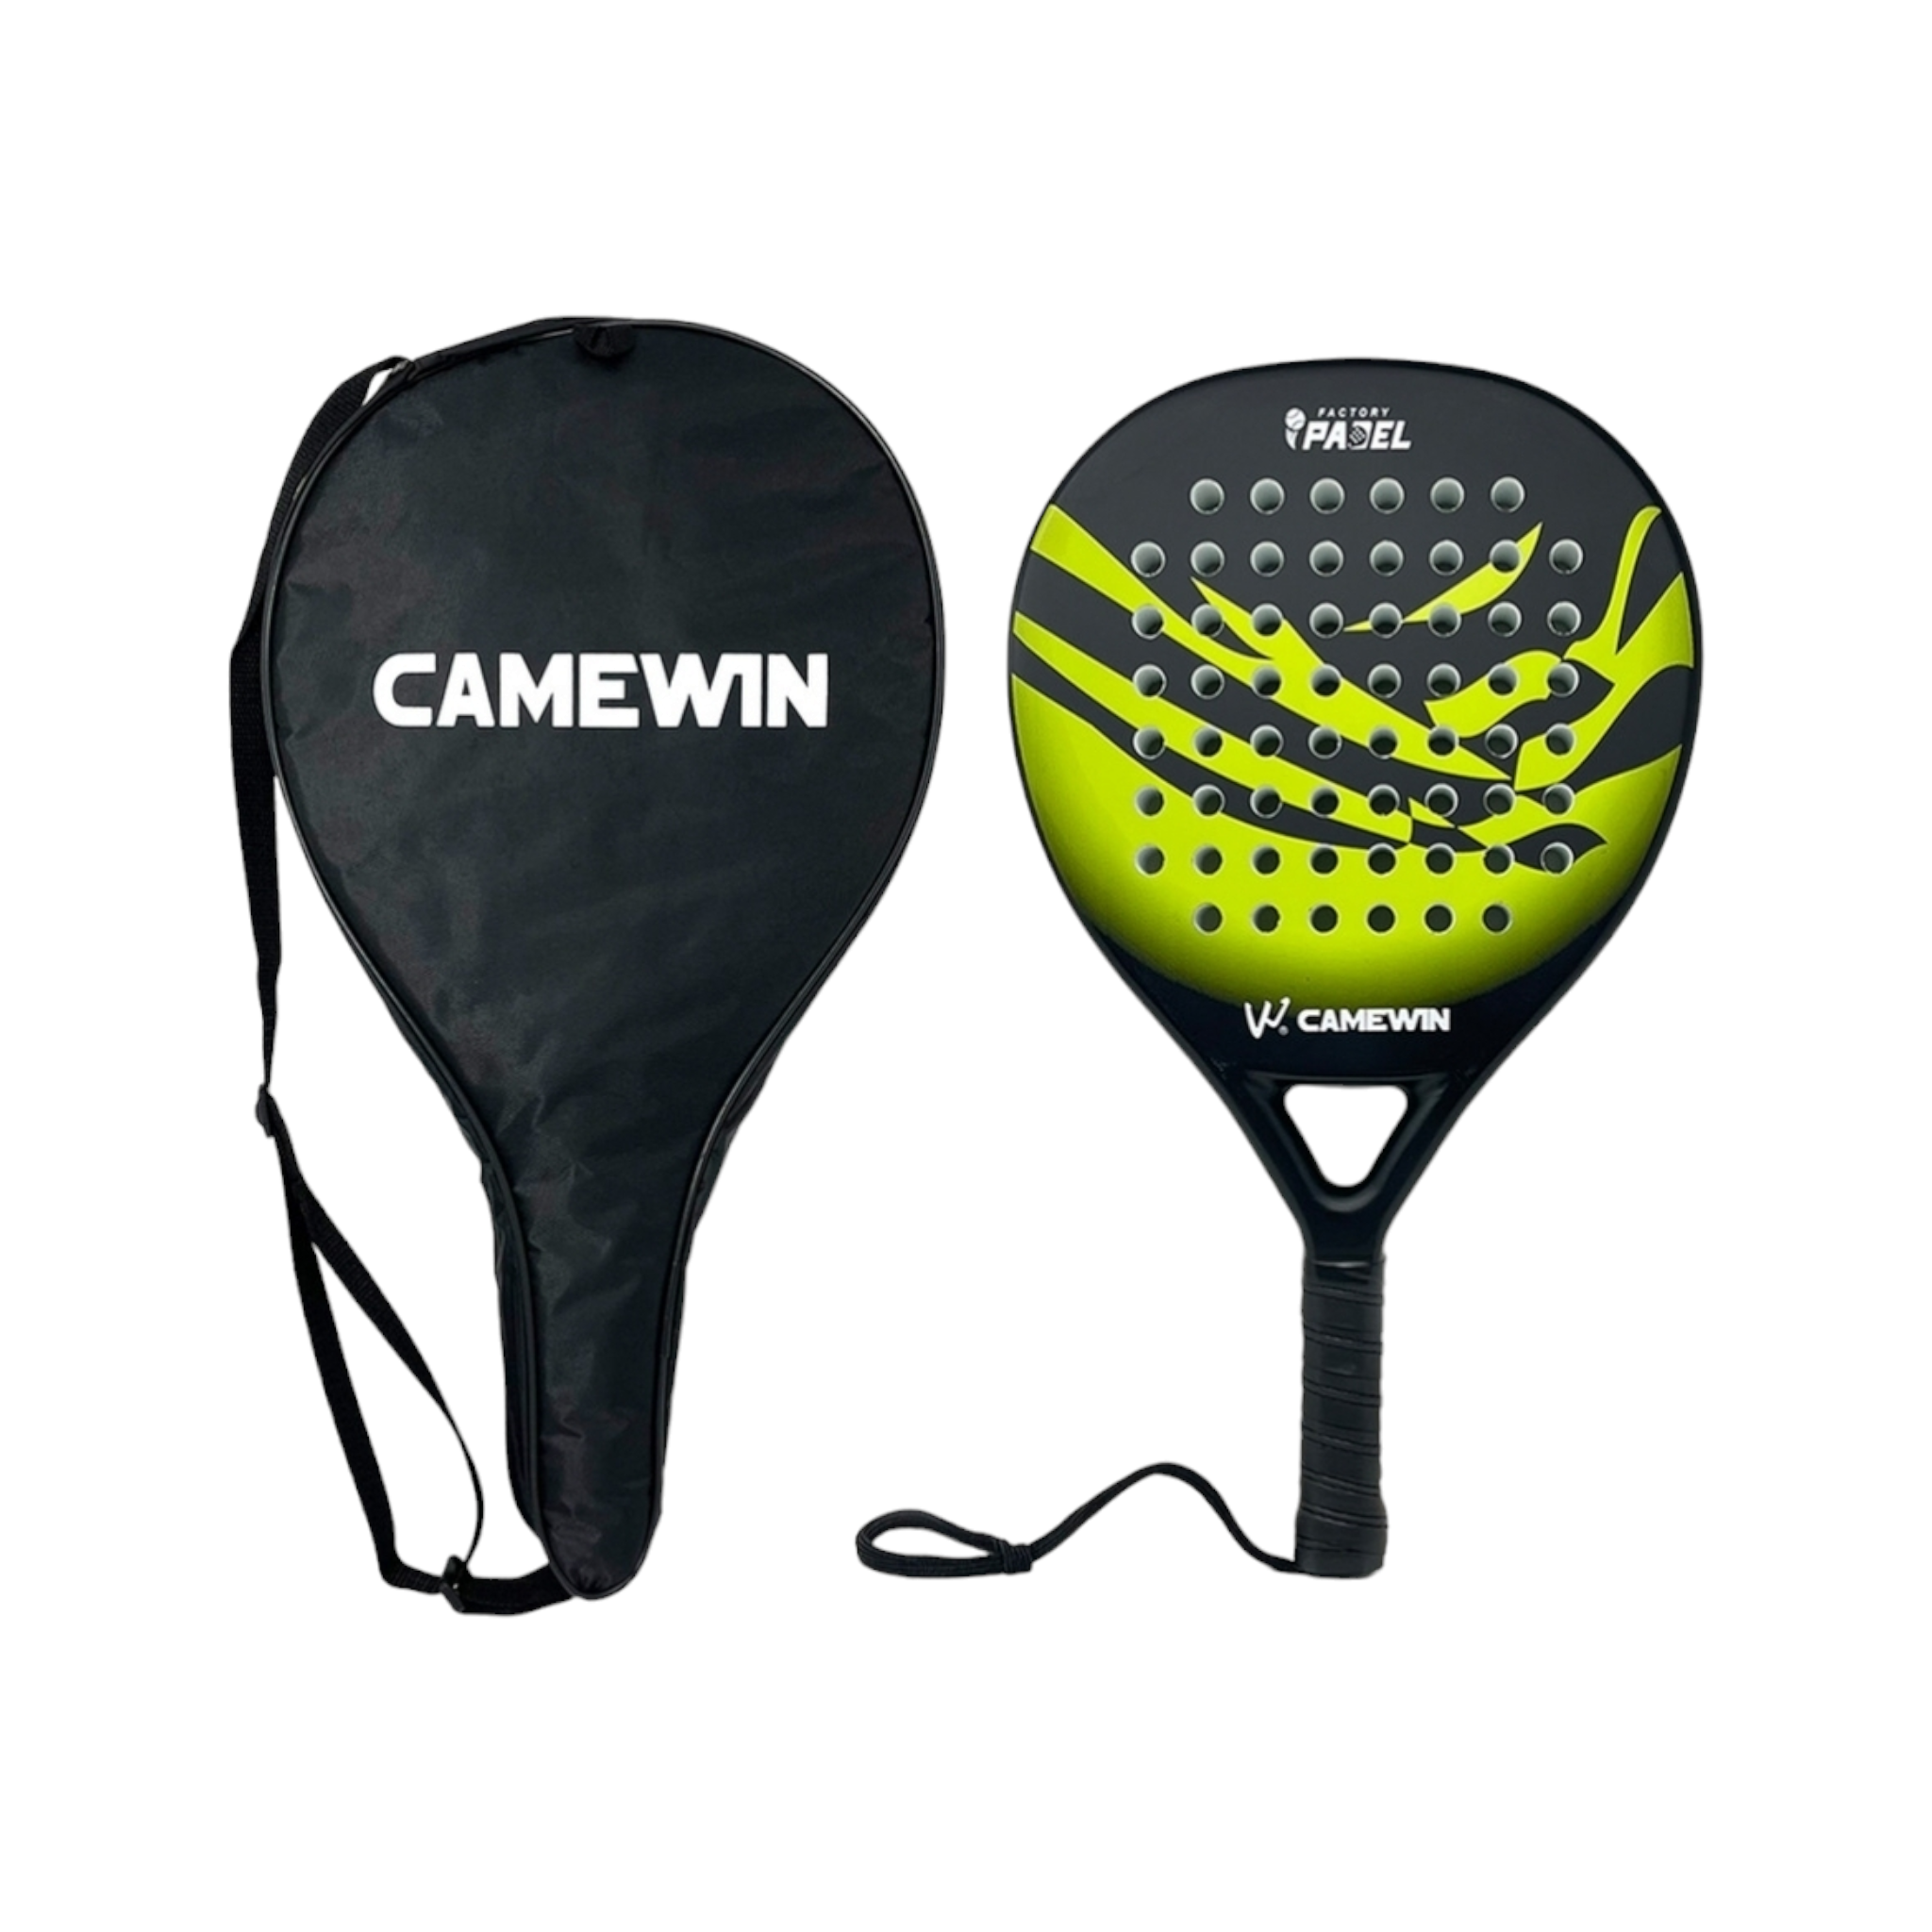 Camewin Padel Racket with Bag